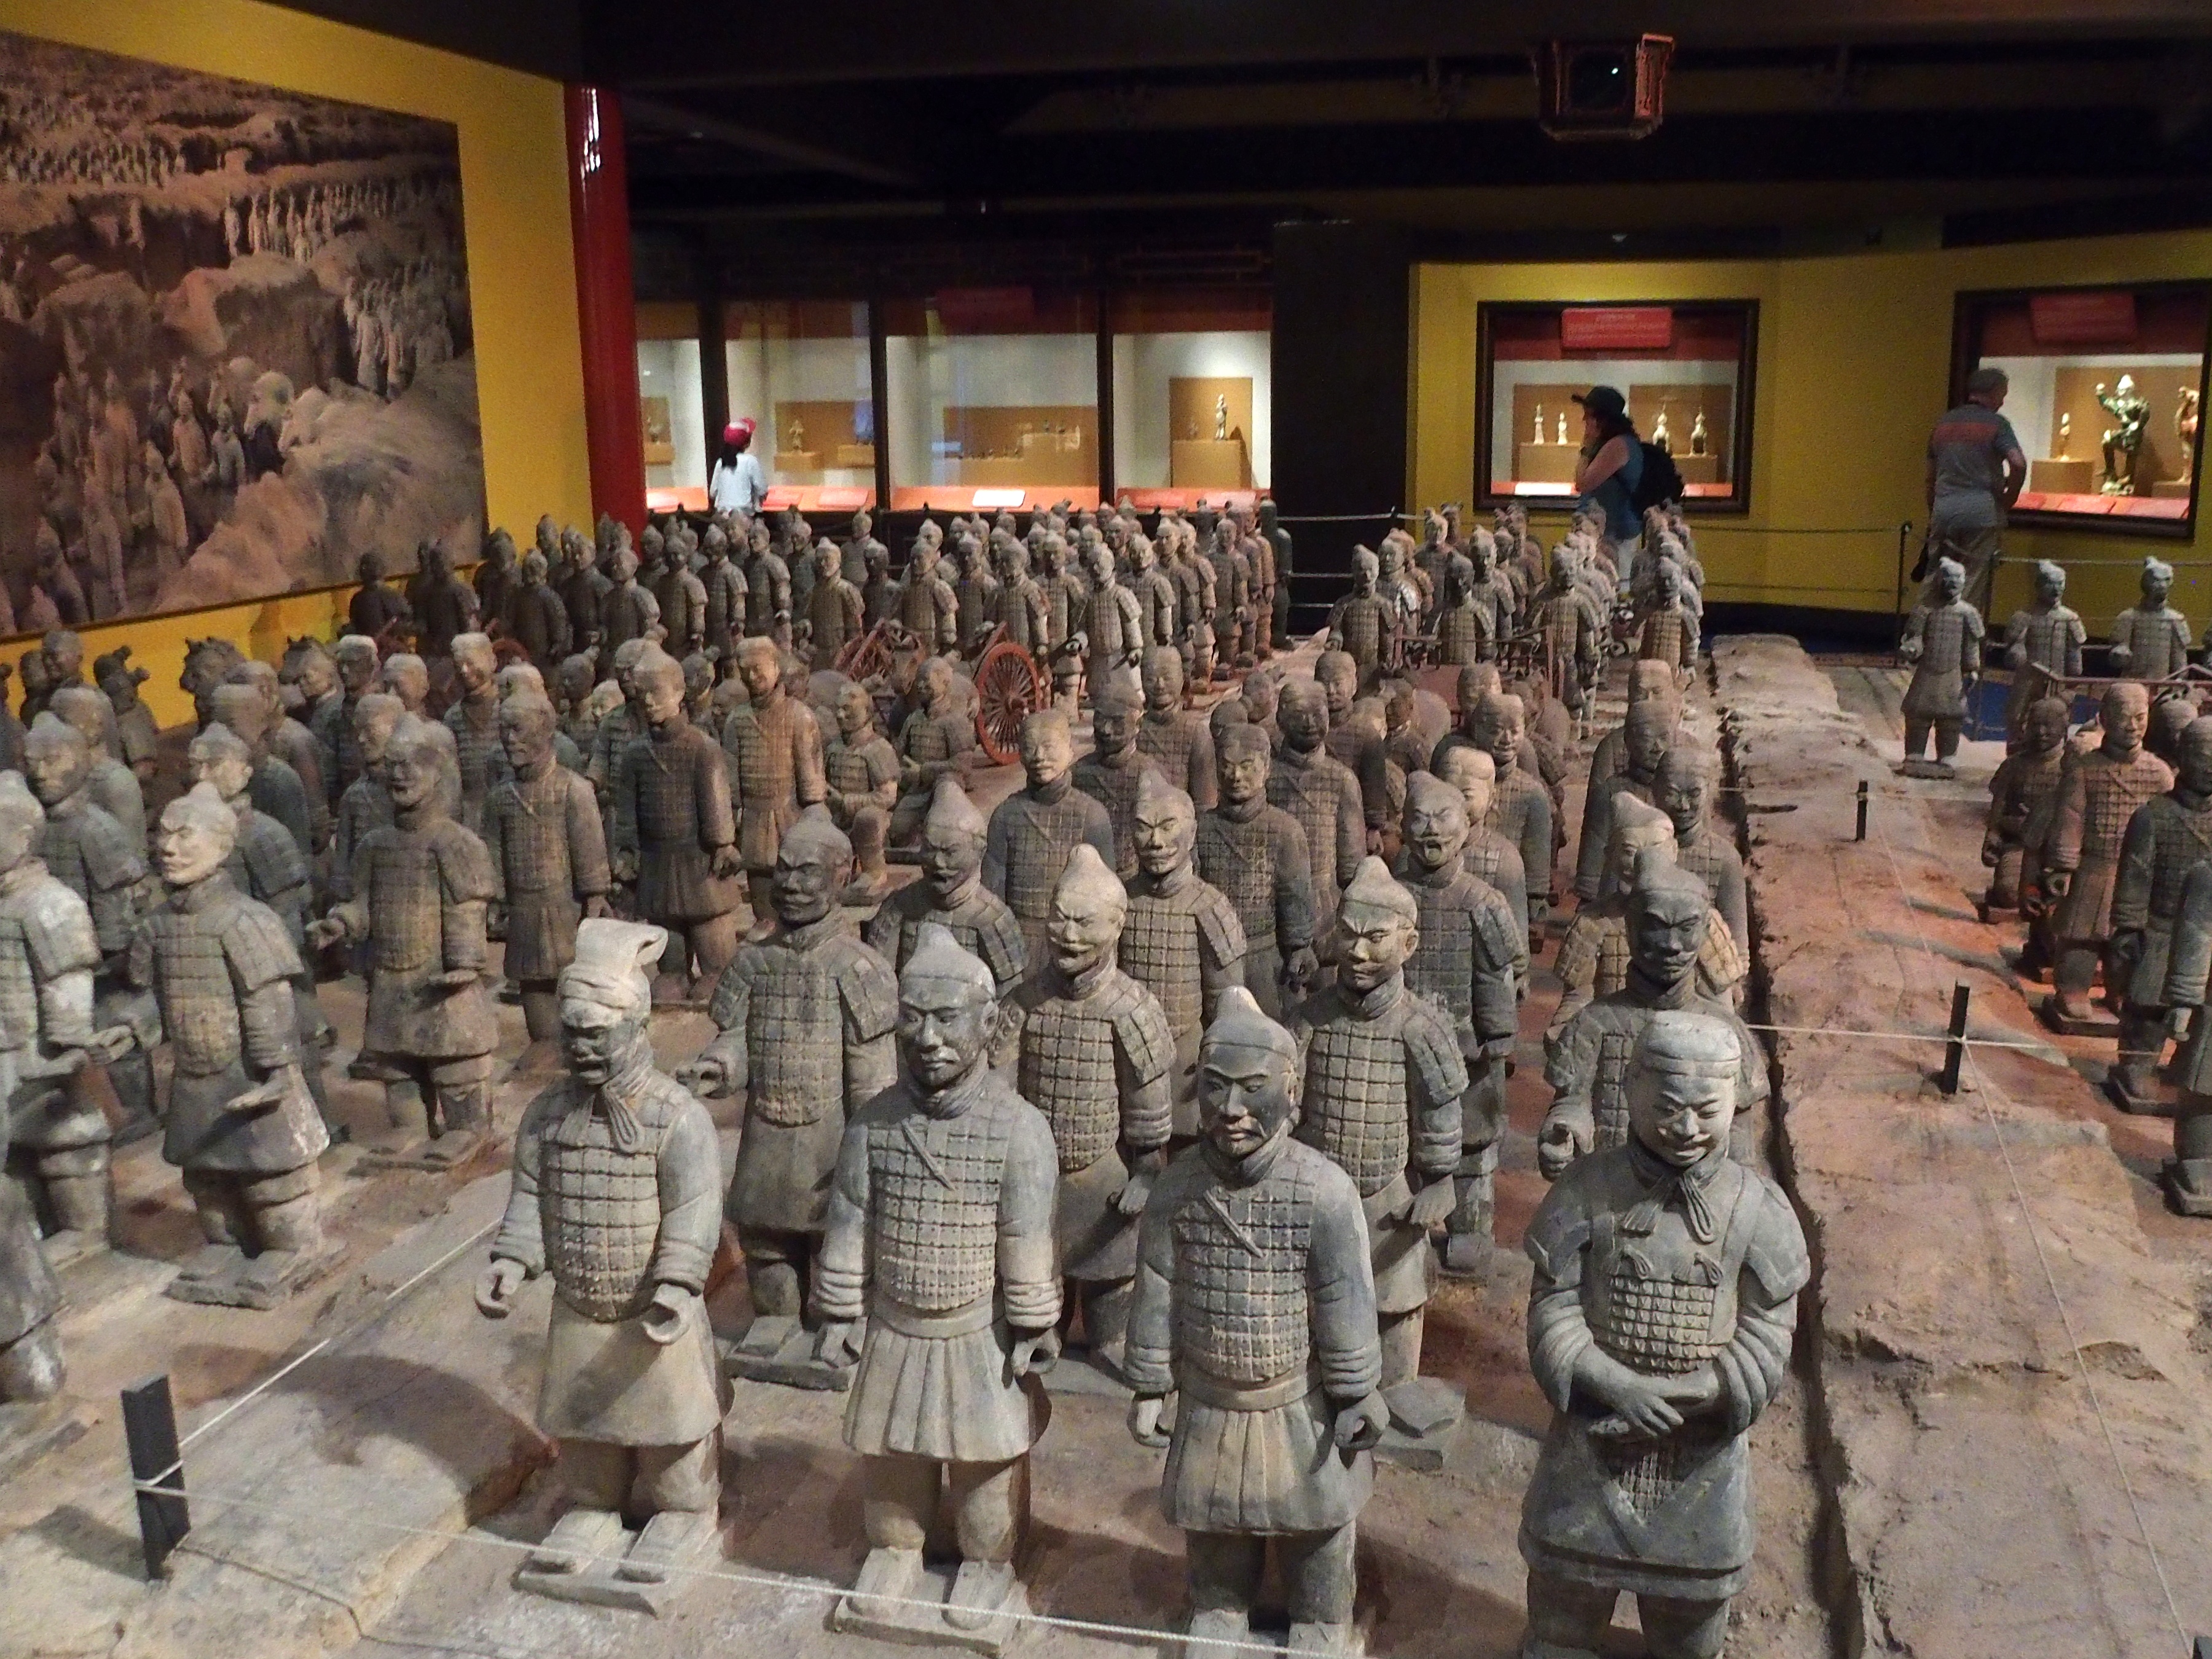 Terracotta replica army